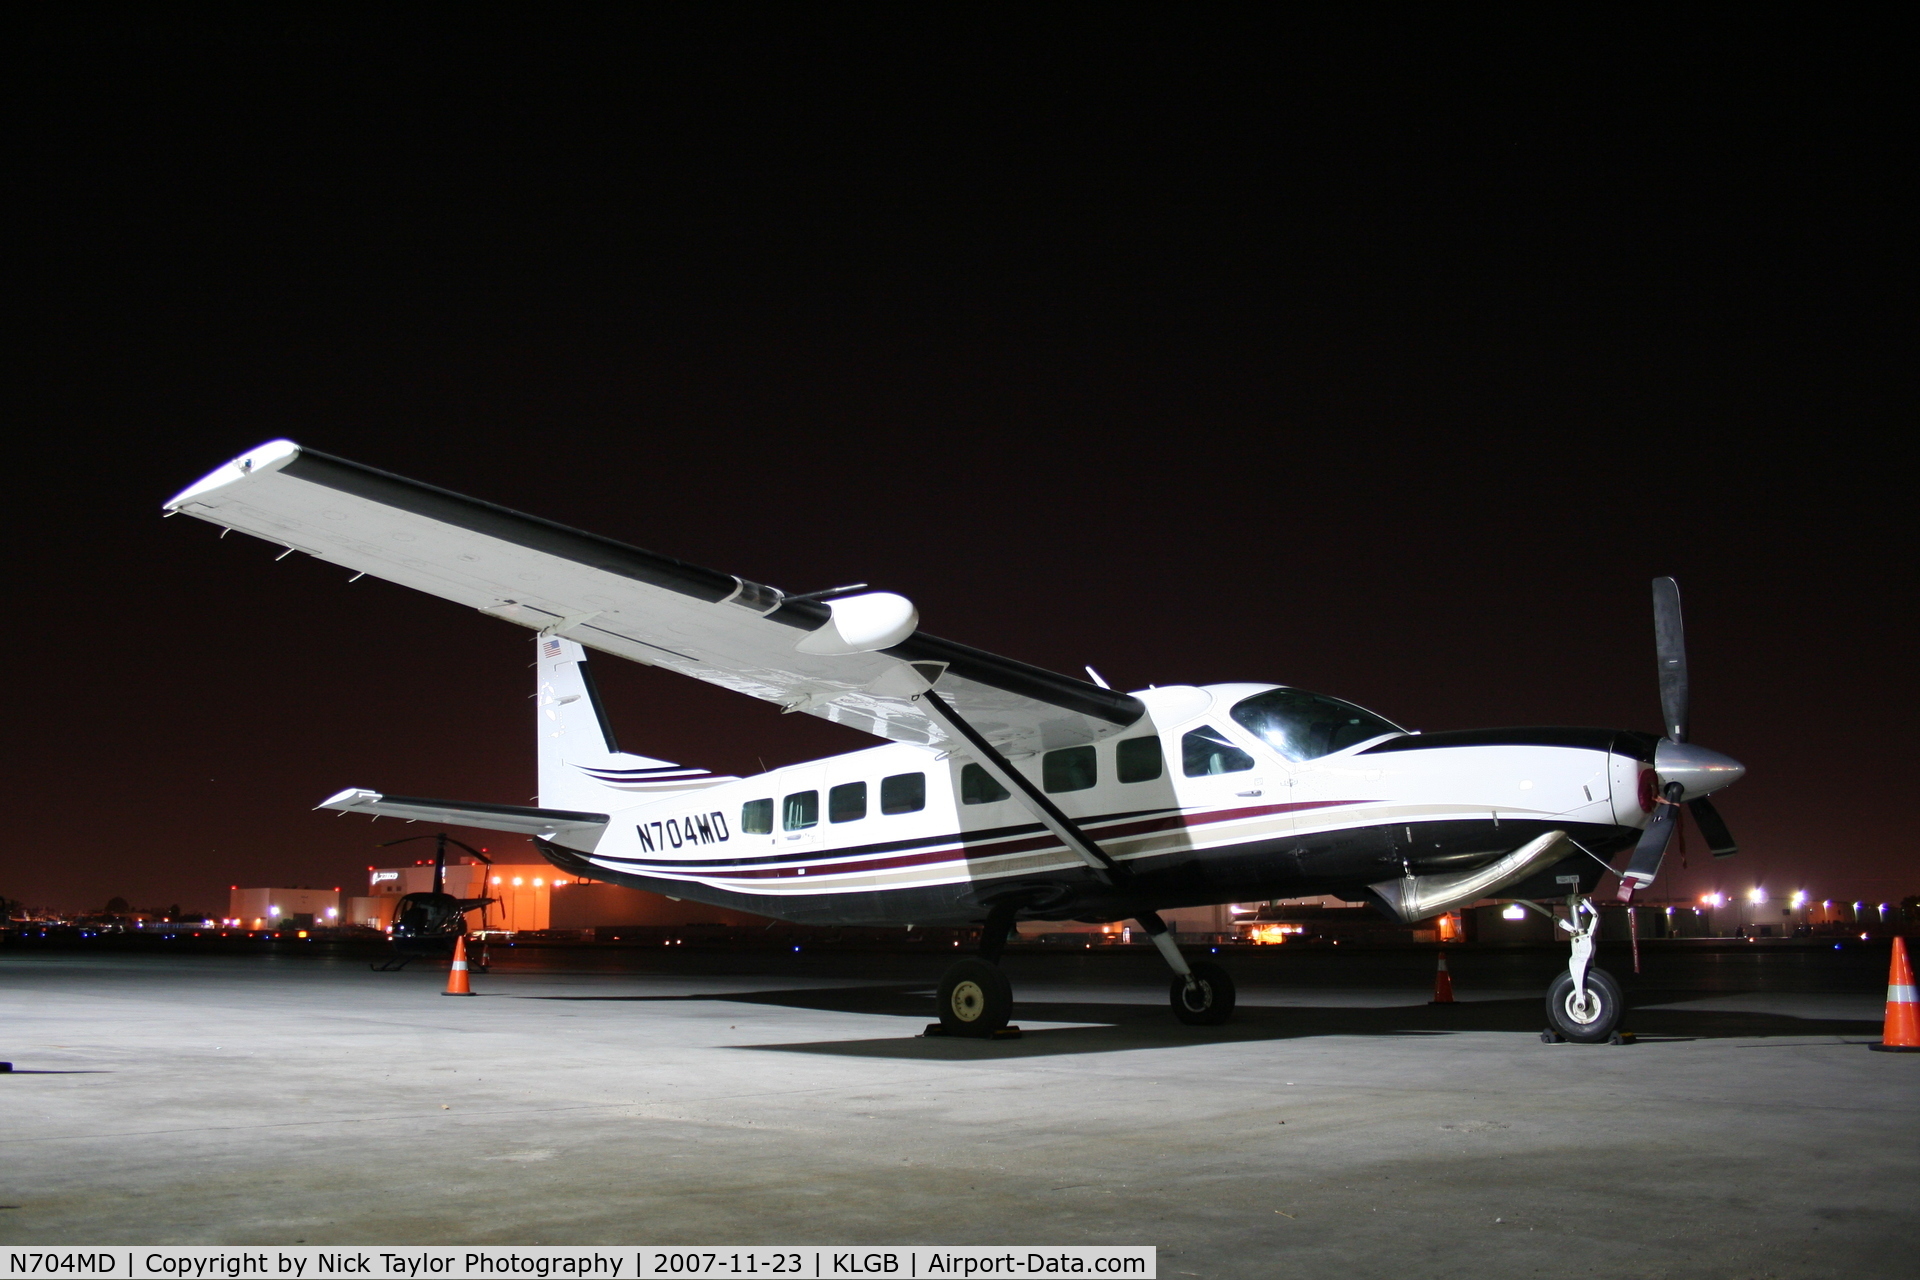 N704MD, 2004 Cessna 208B C/N 208B1076, Overnight at the Mercury FBO ramp